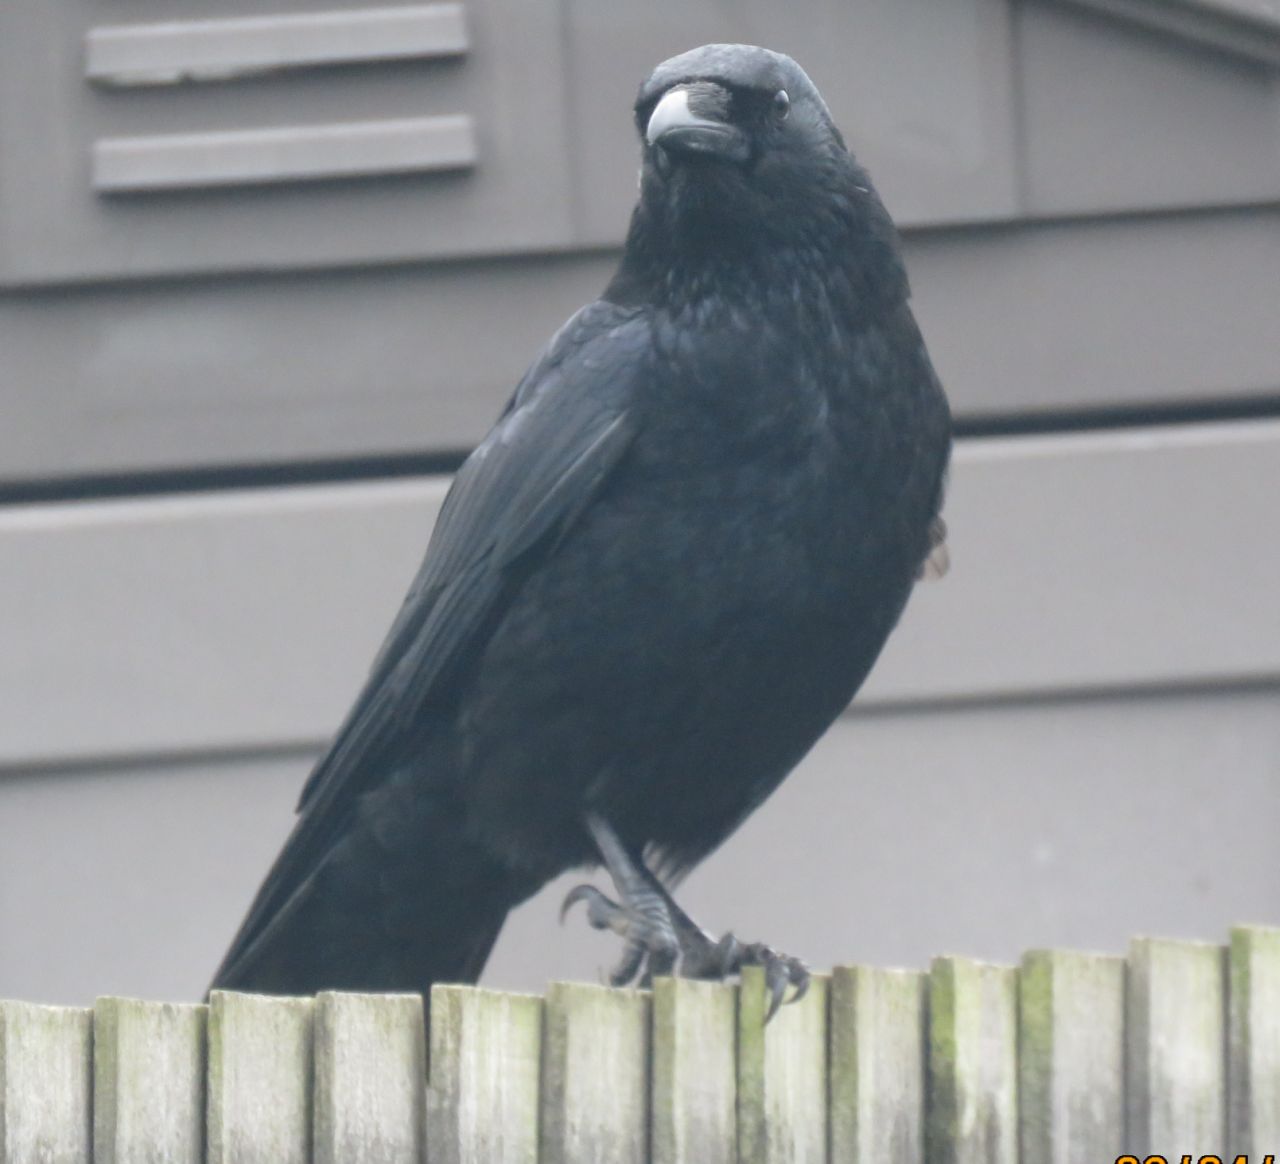  Carrion Crow 